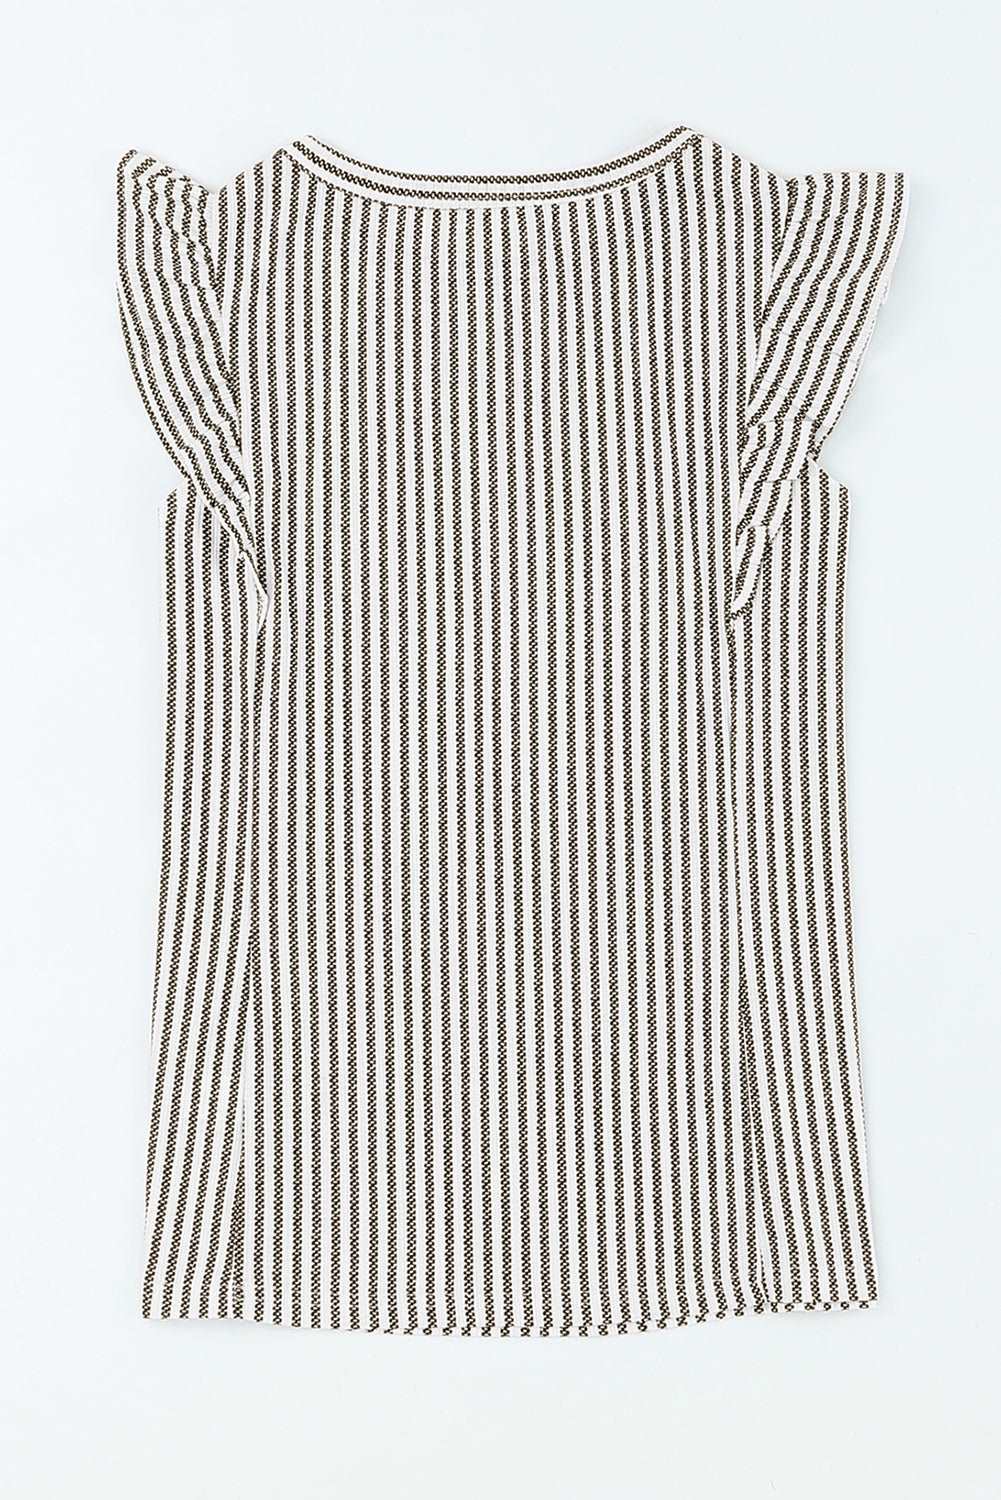 Grey Casual Striped Print Ruffle Summer Top